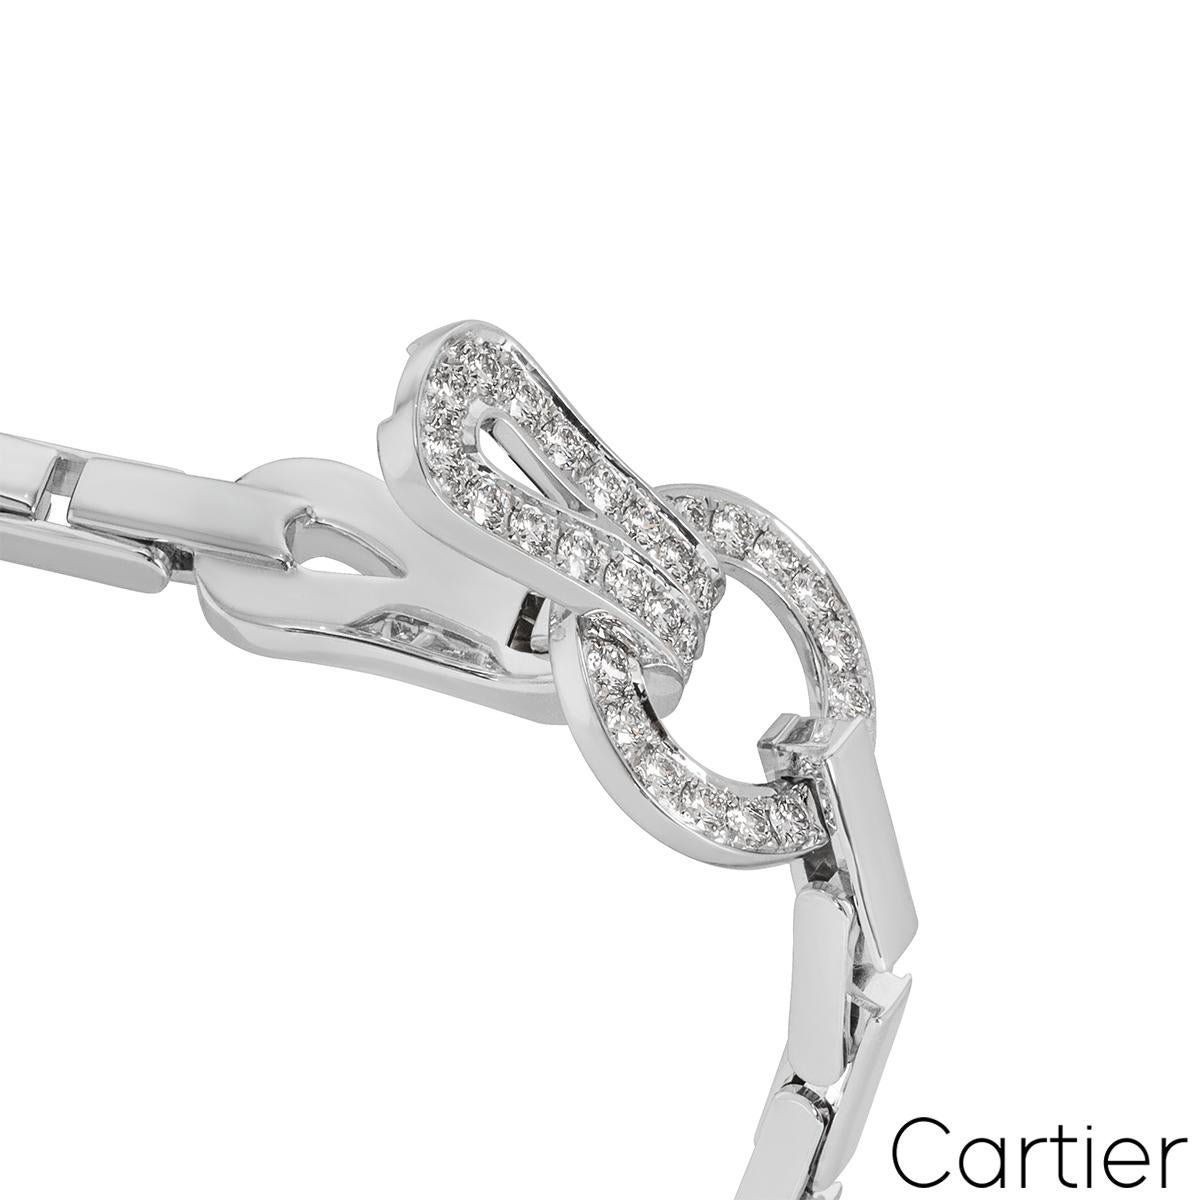 Women's or Men's Cartier White Gold Diamond Agrafe Bracelet Watch